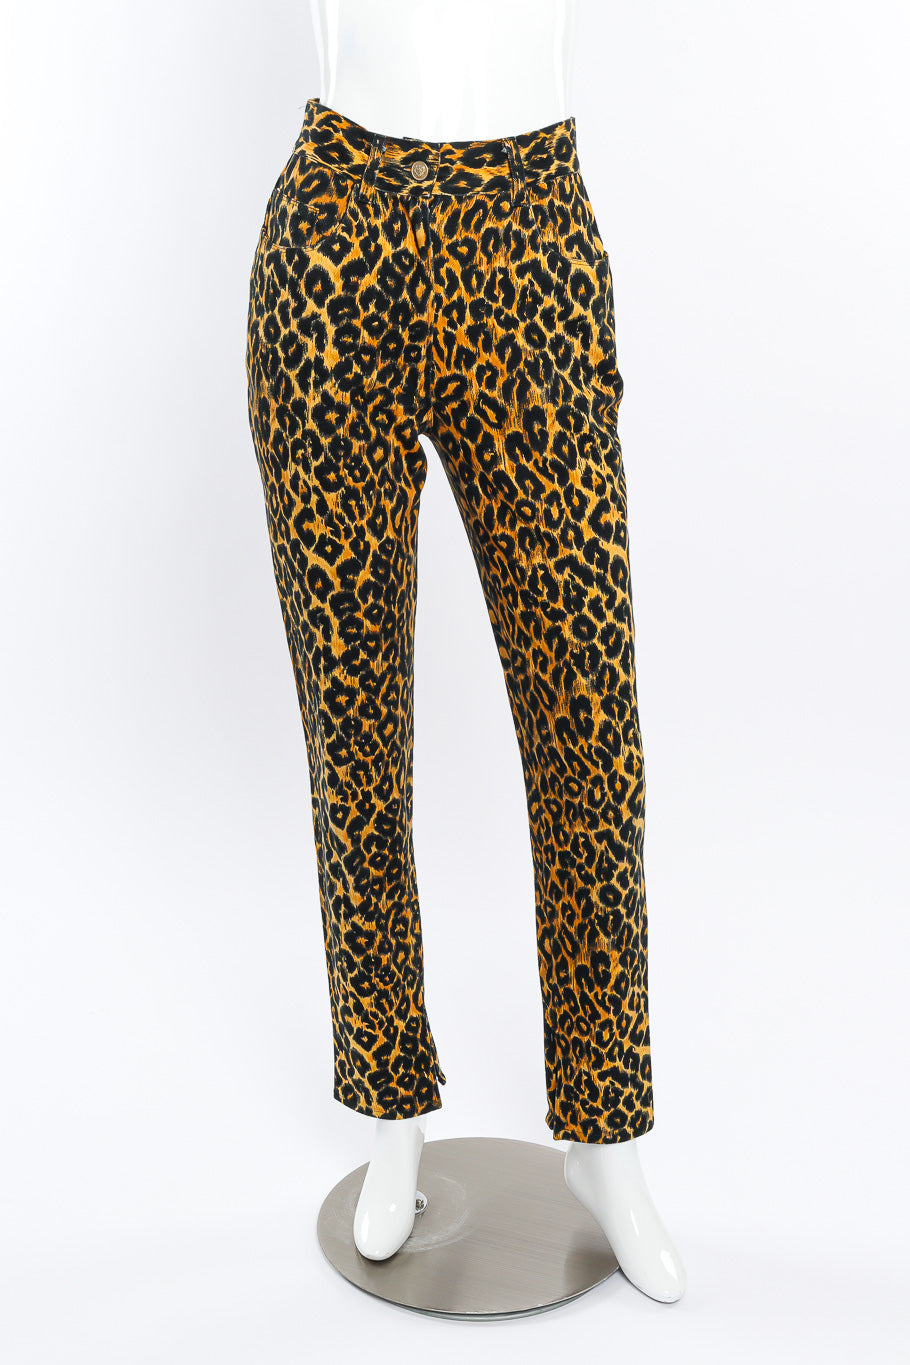 Versus Versace Leopard Print Denim Pant front view on mannequin @Recessla